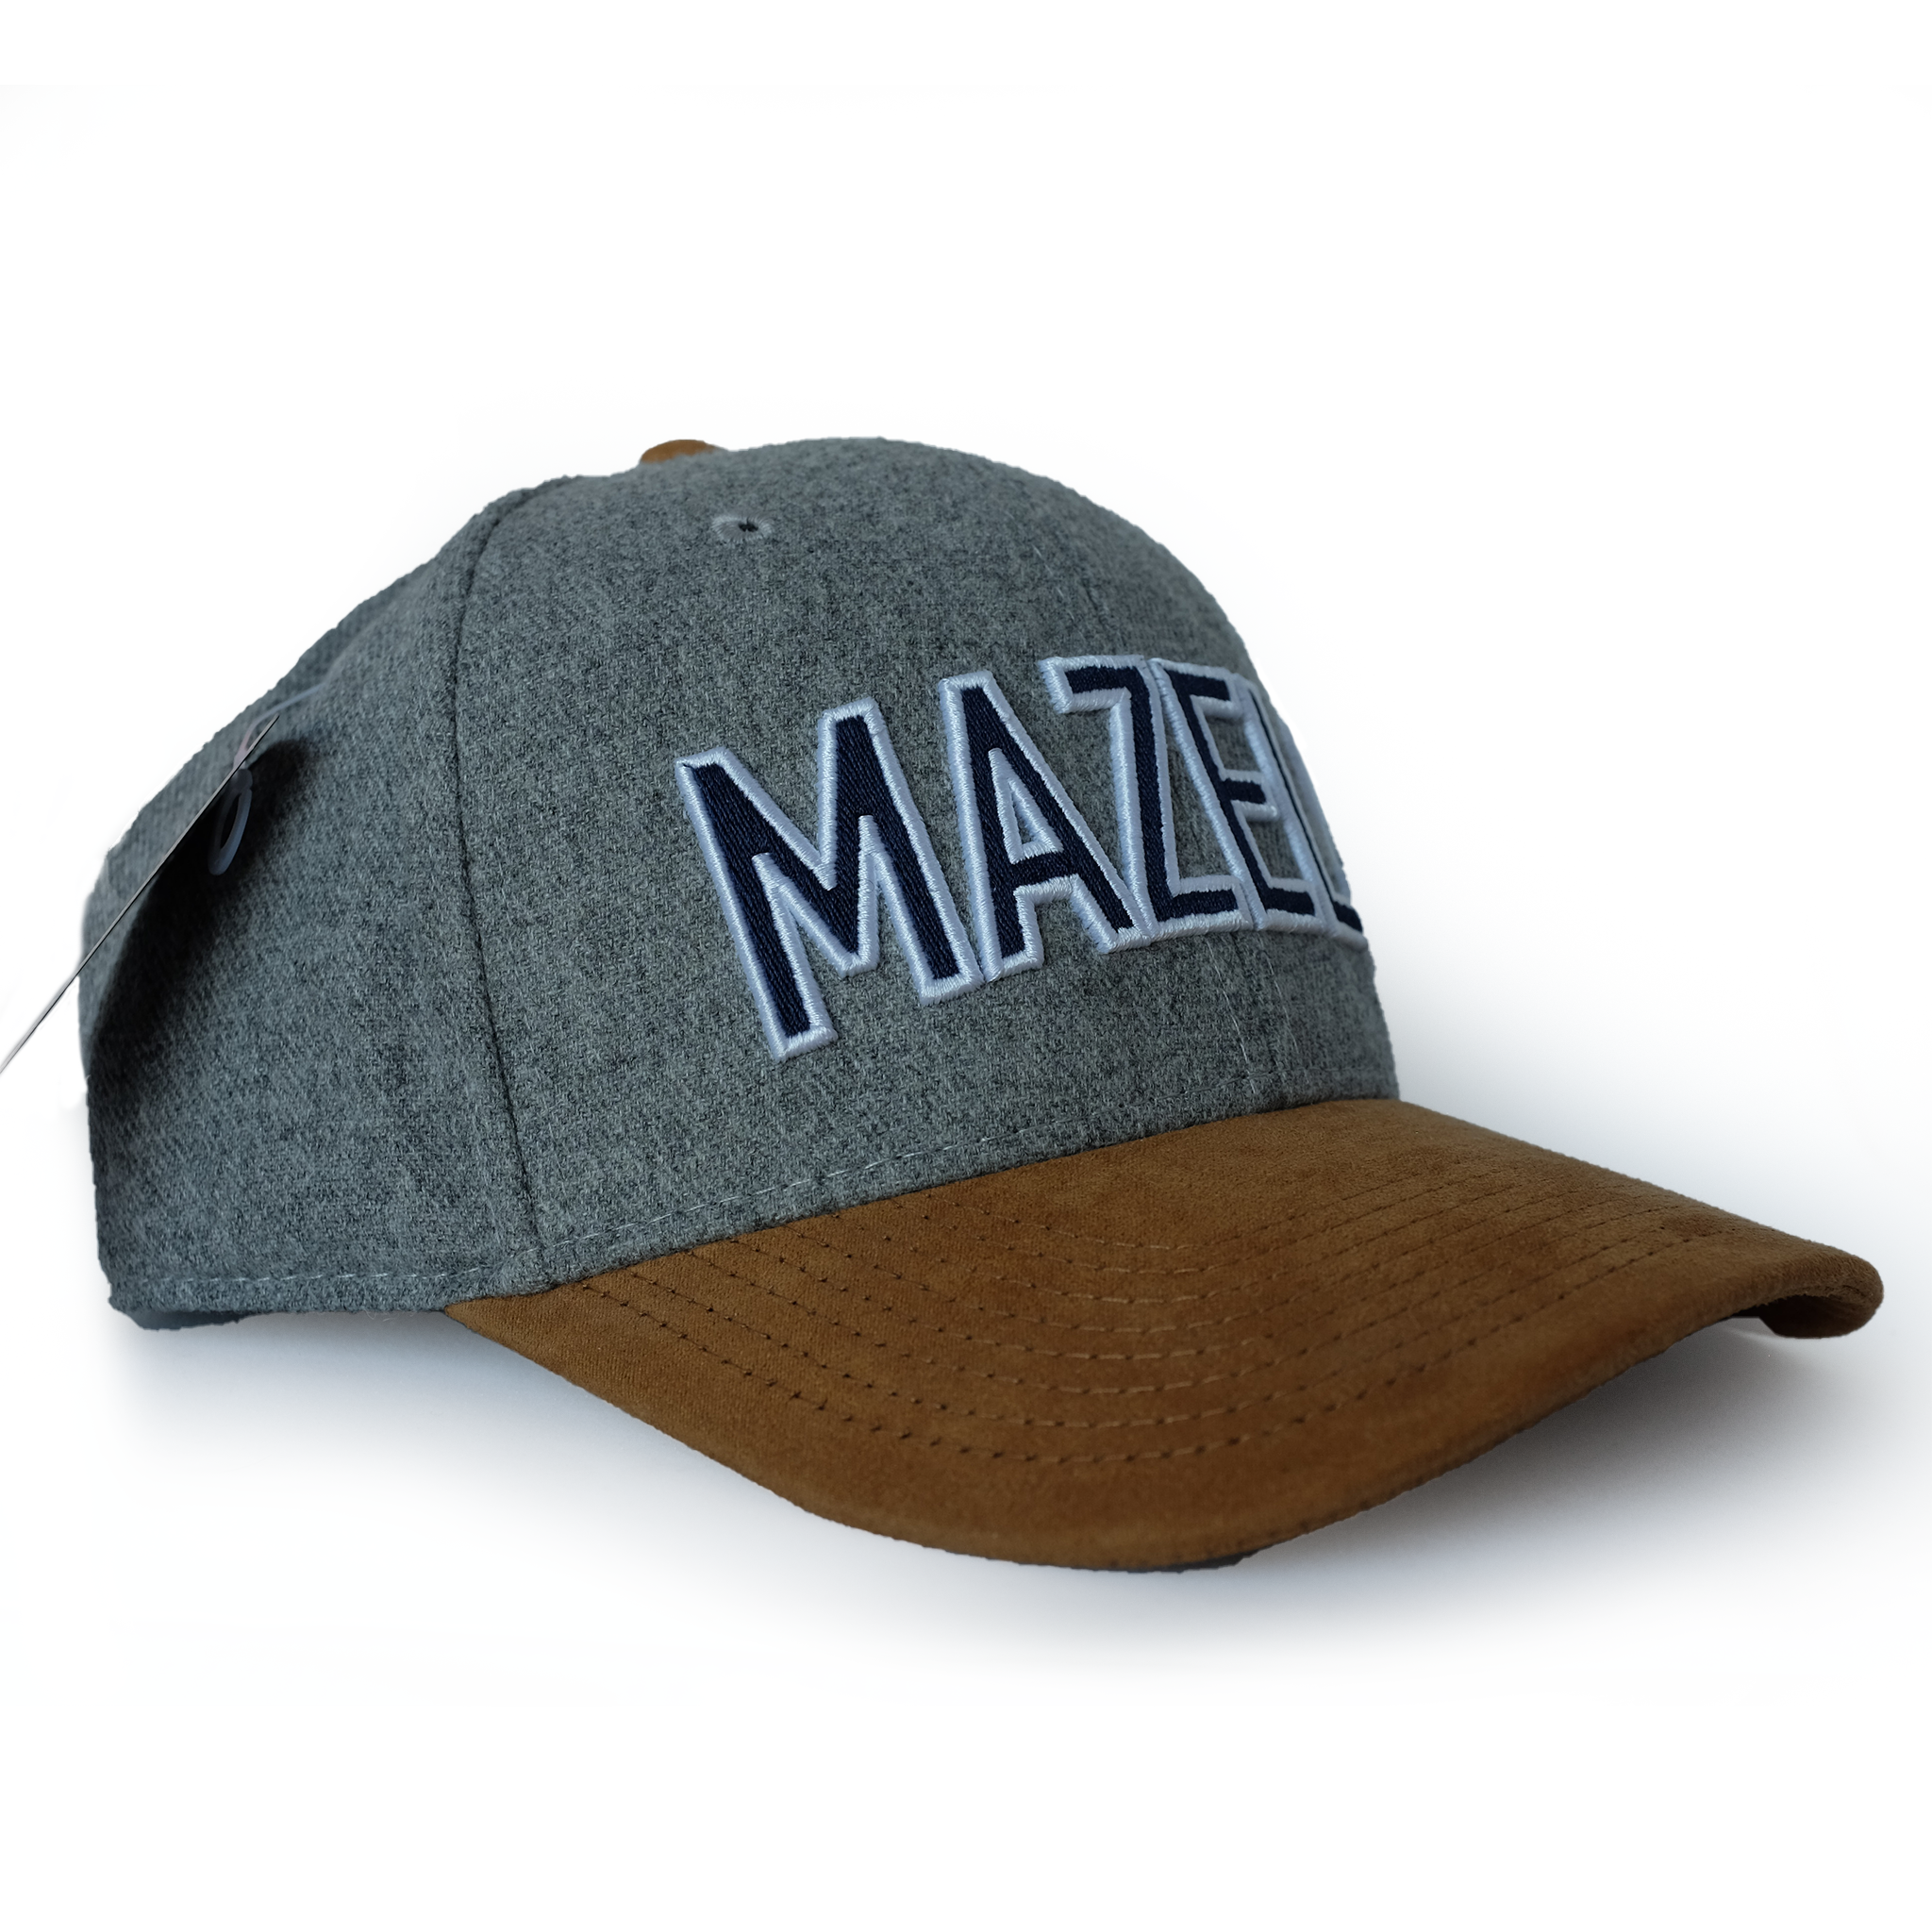 Mazels Hat